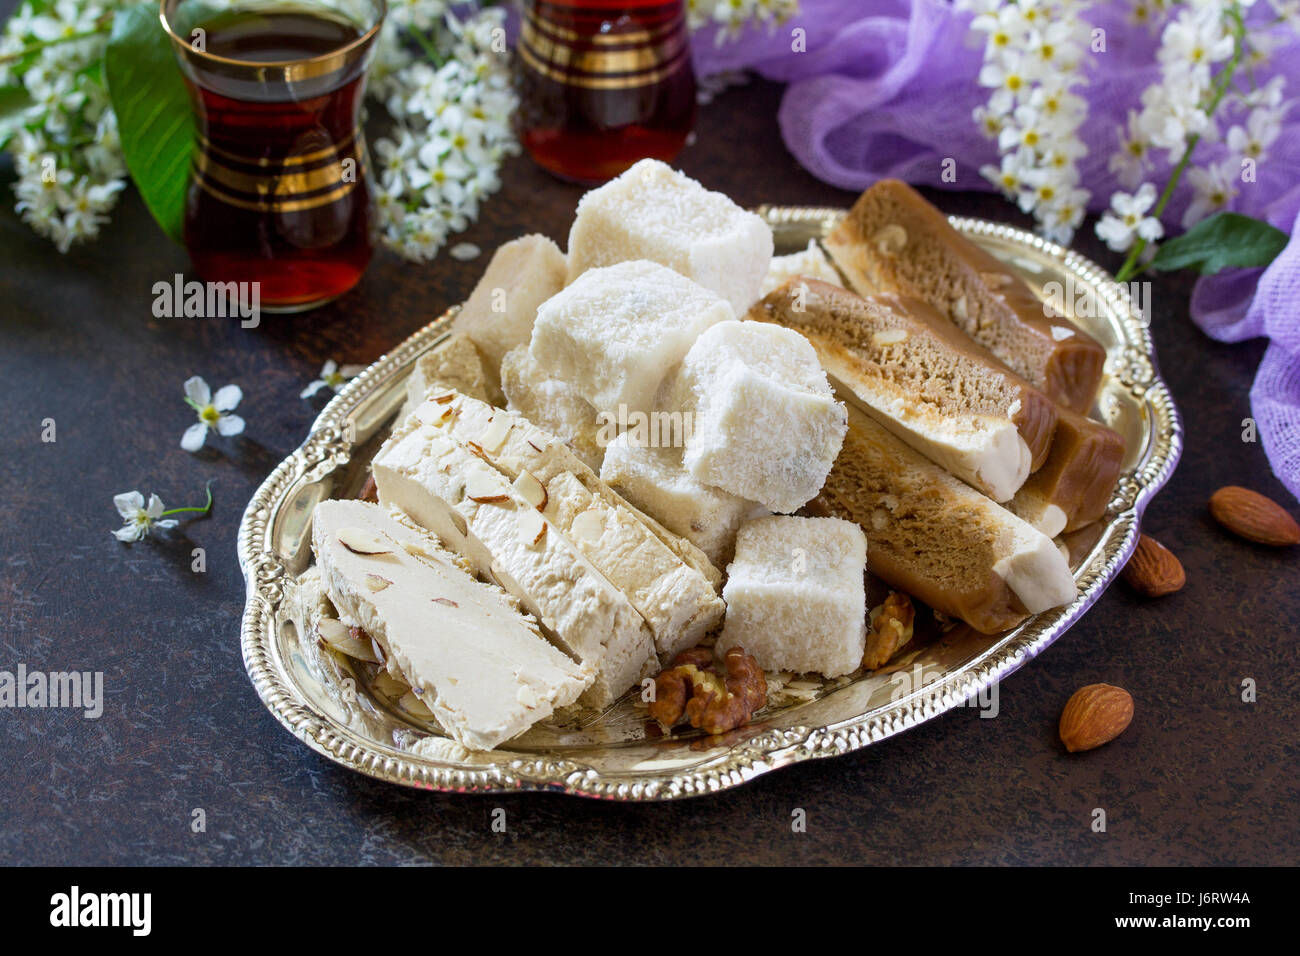 Rahat Lukum, sherbet, halva and tea on the kitchen table. Turkish and Arabic sweets. Ramadan food. Stock Photo